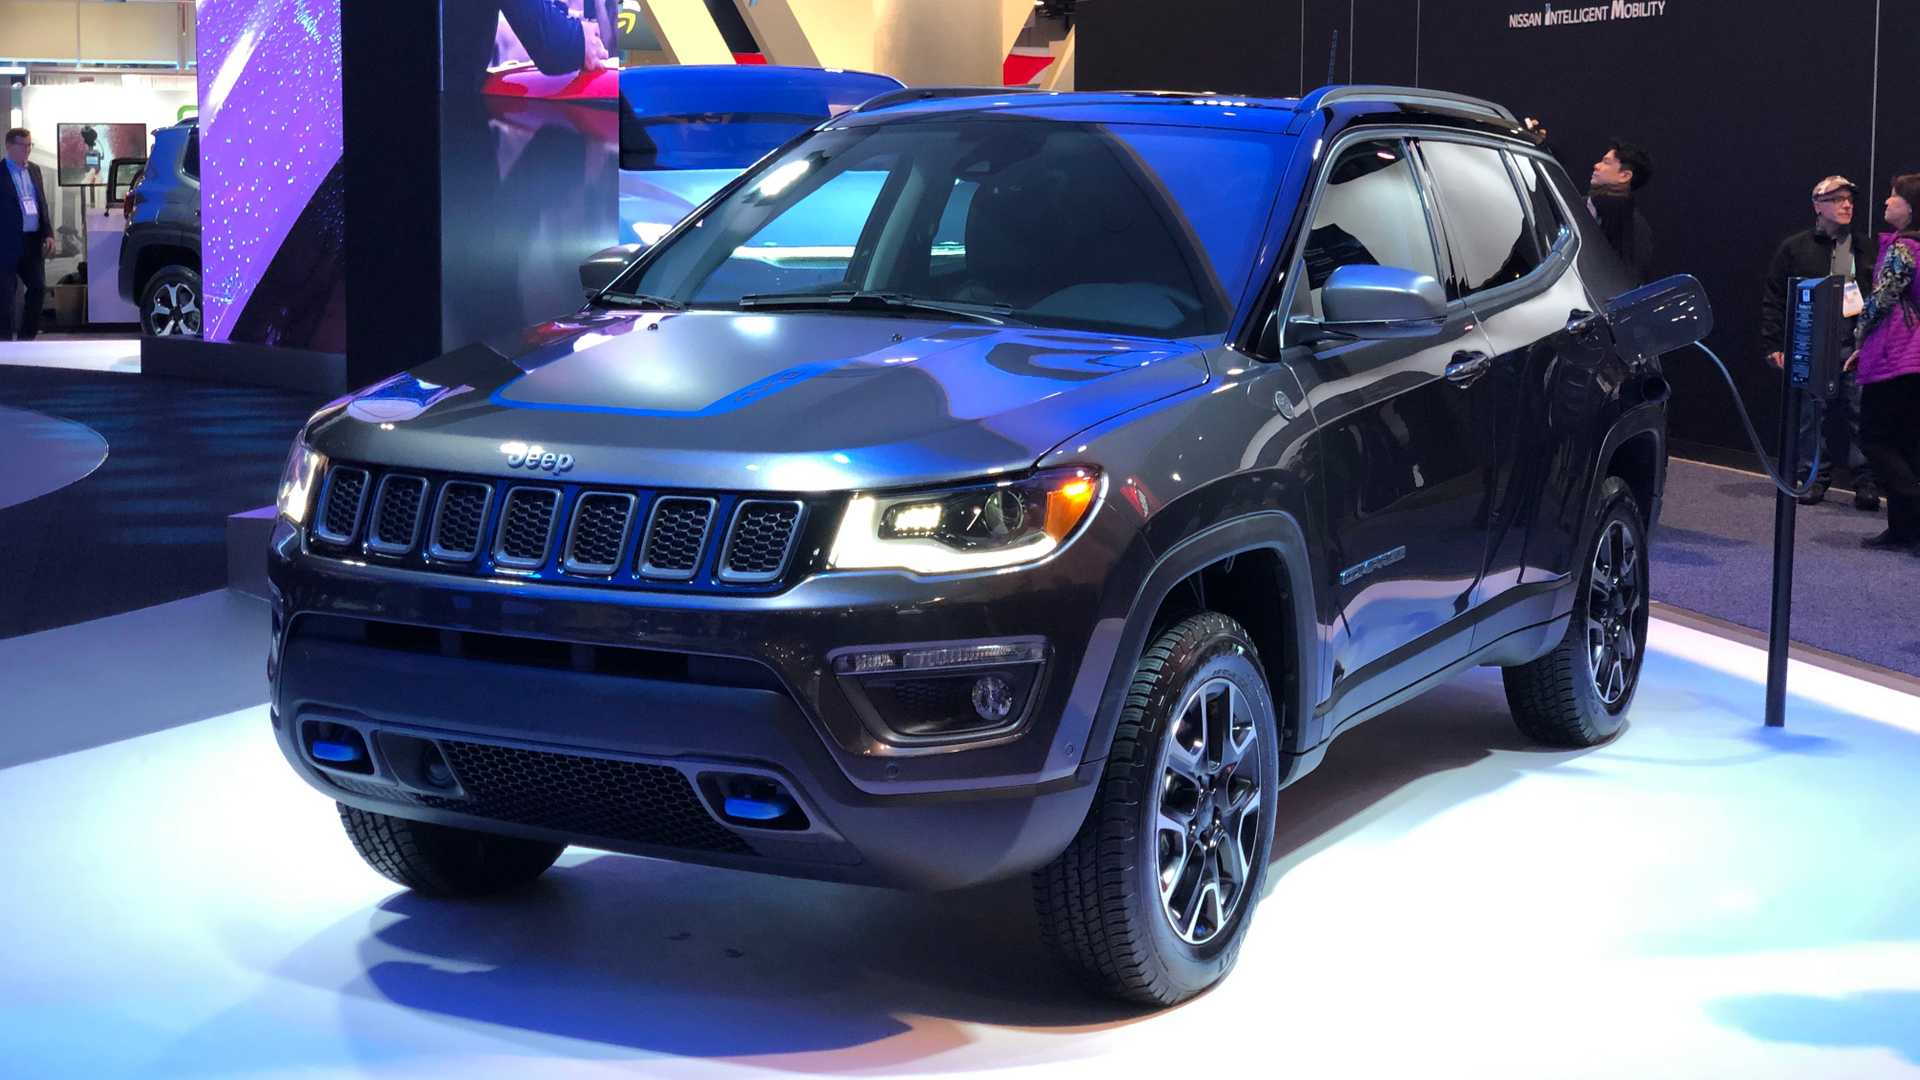 Jeep Unveils Three New Hybrid Models at CES 2020 Jkforum